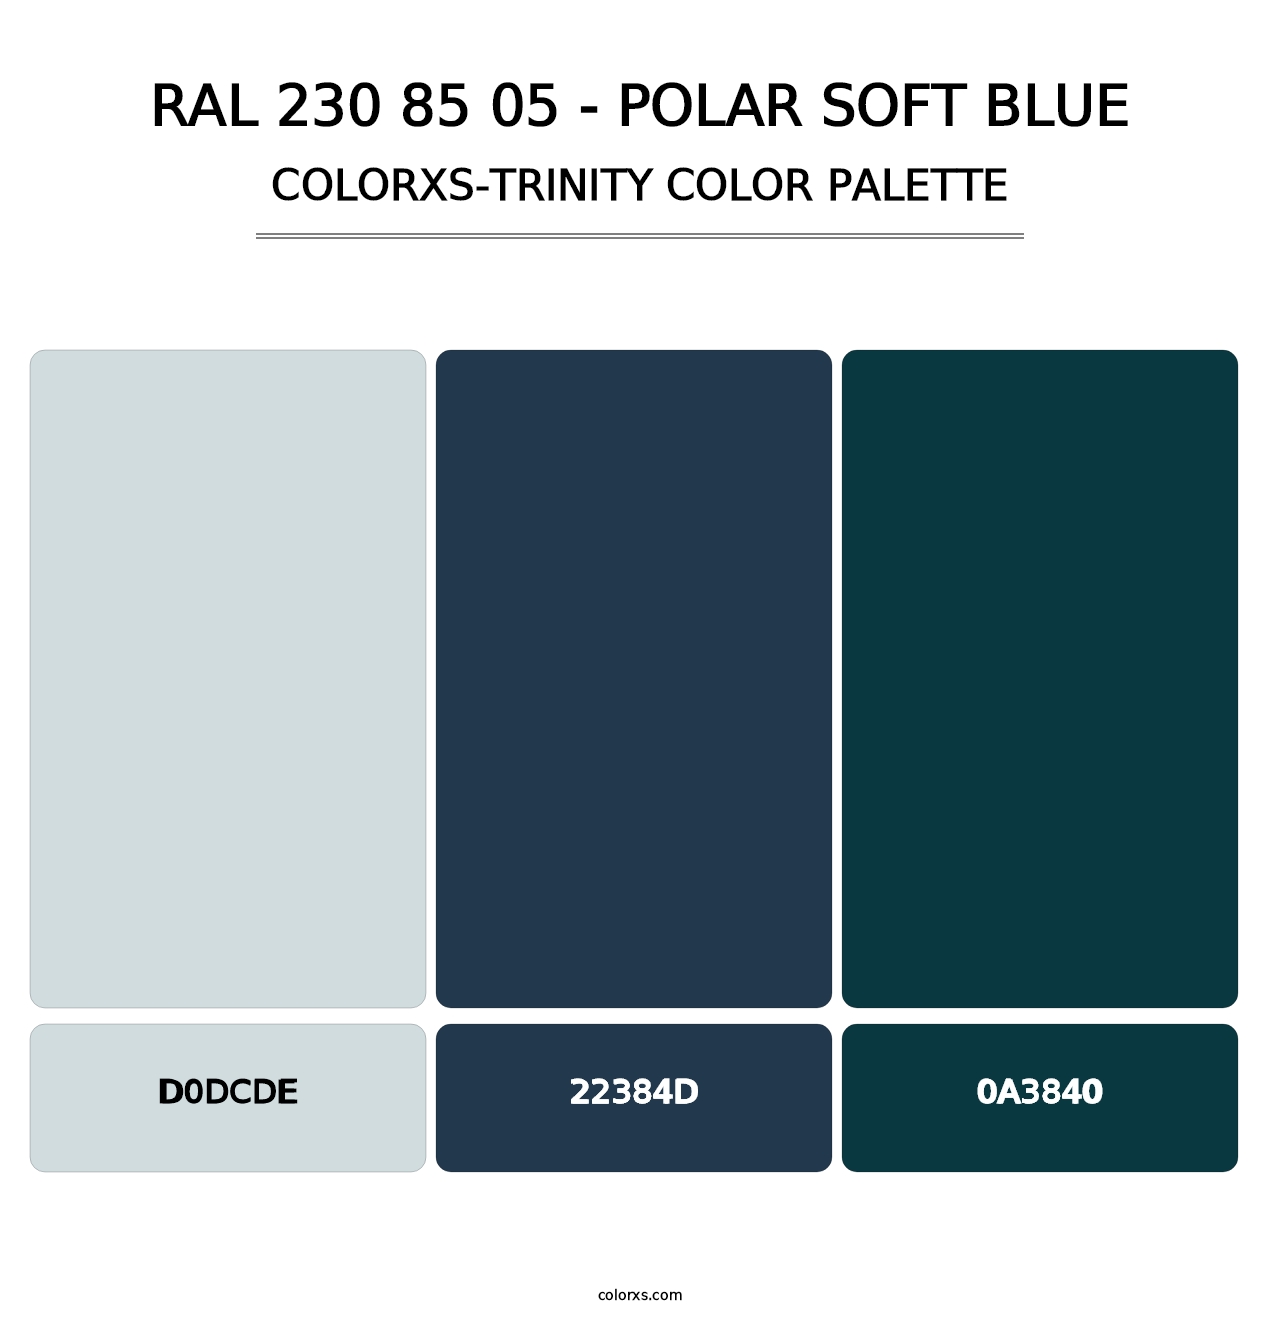 RAL 230 85 05 - Polar Soft Blue - Colorxs Trinity Palette